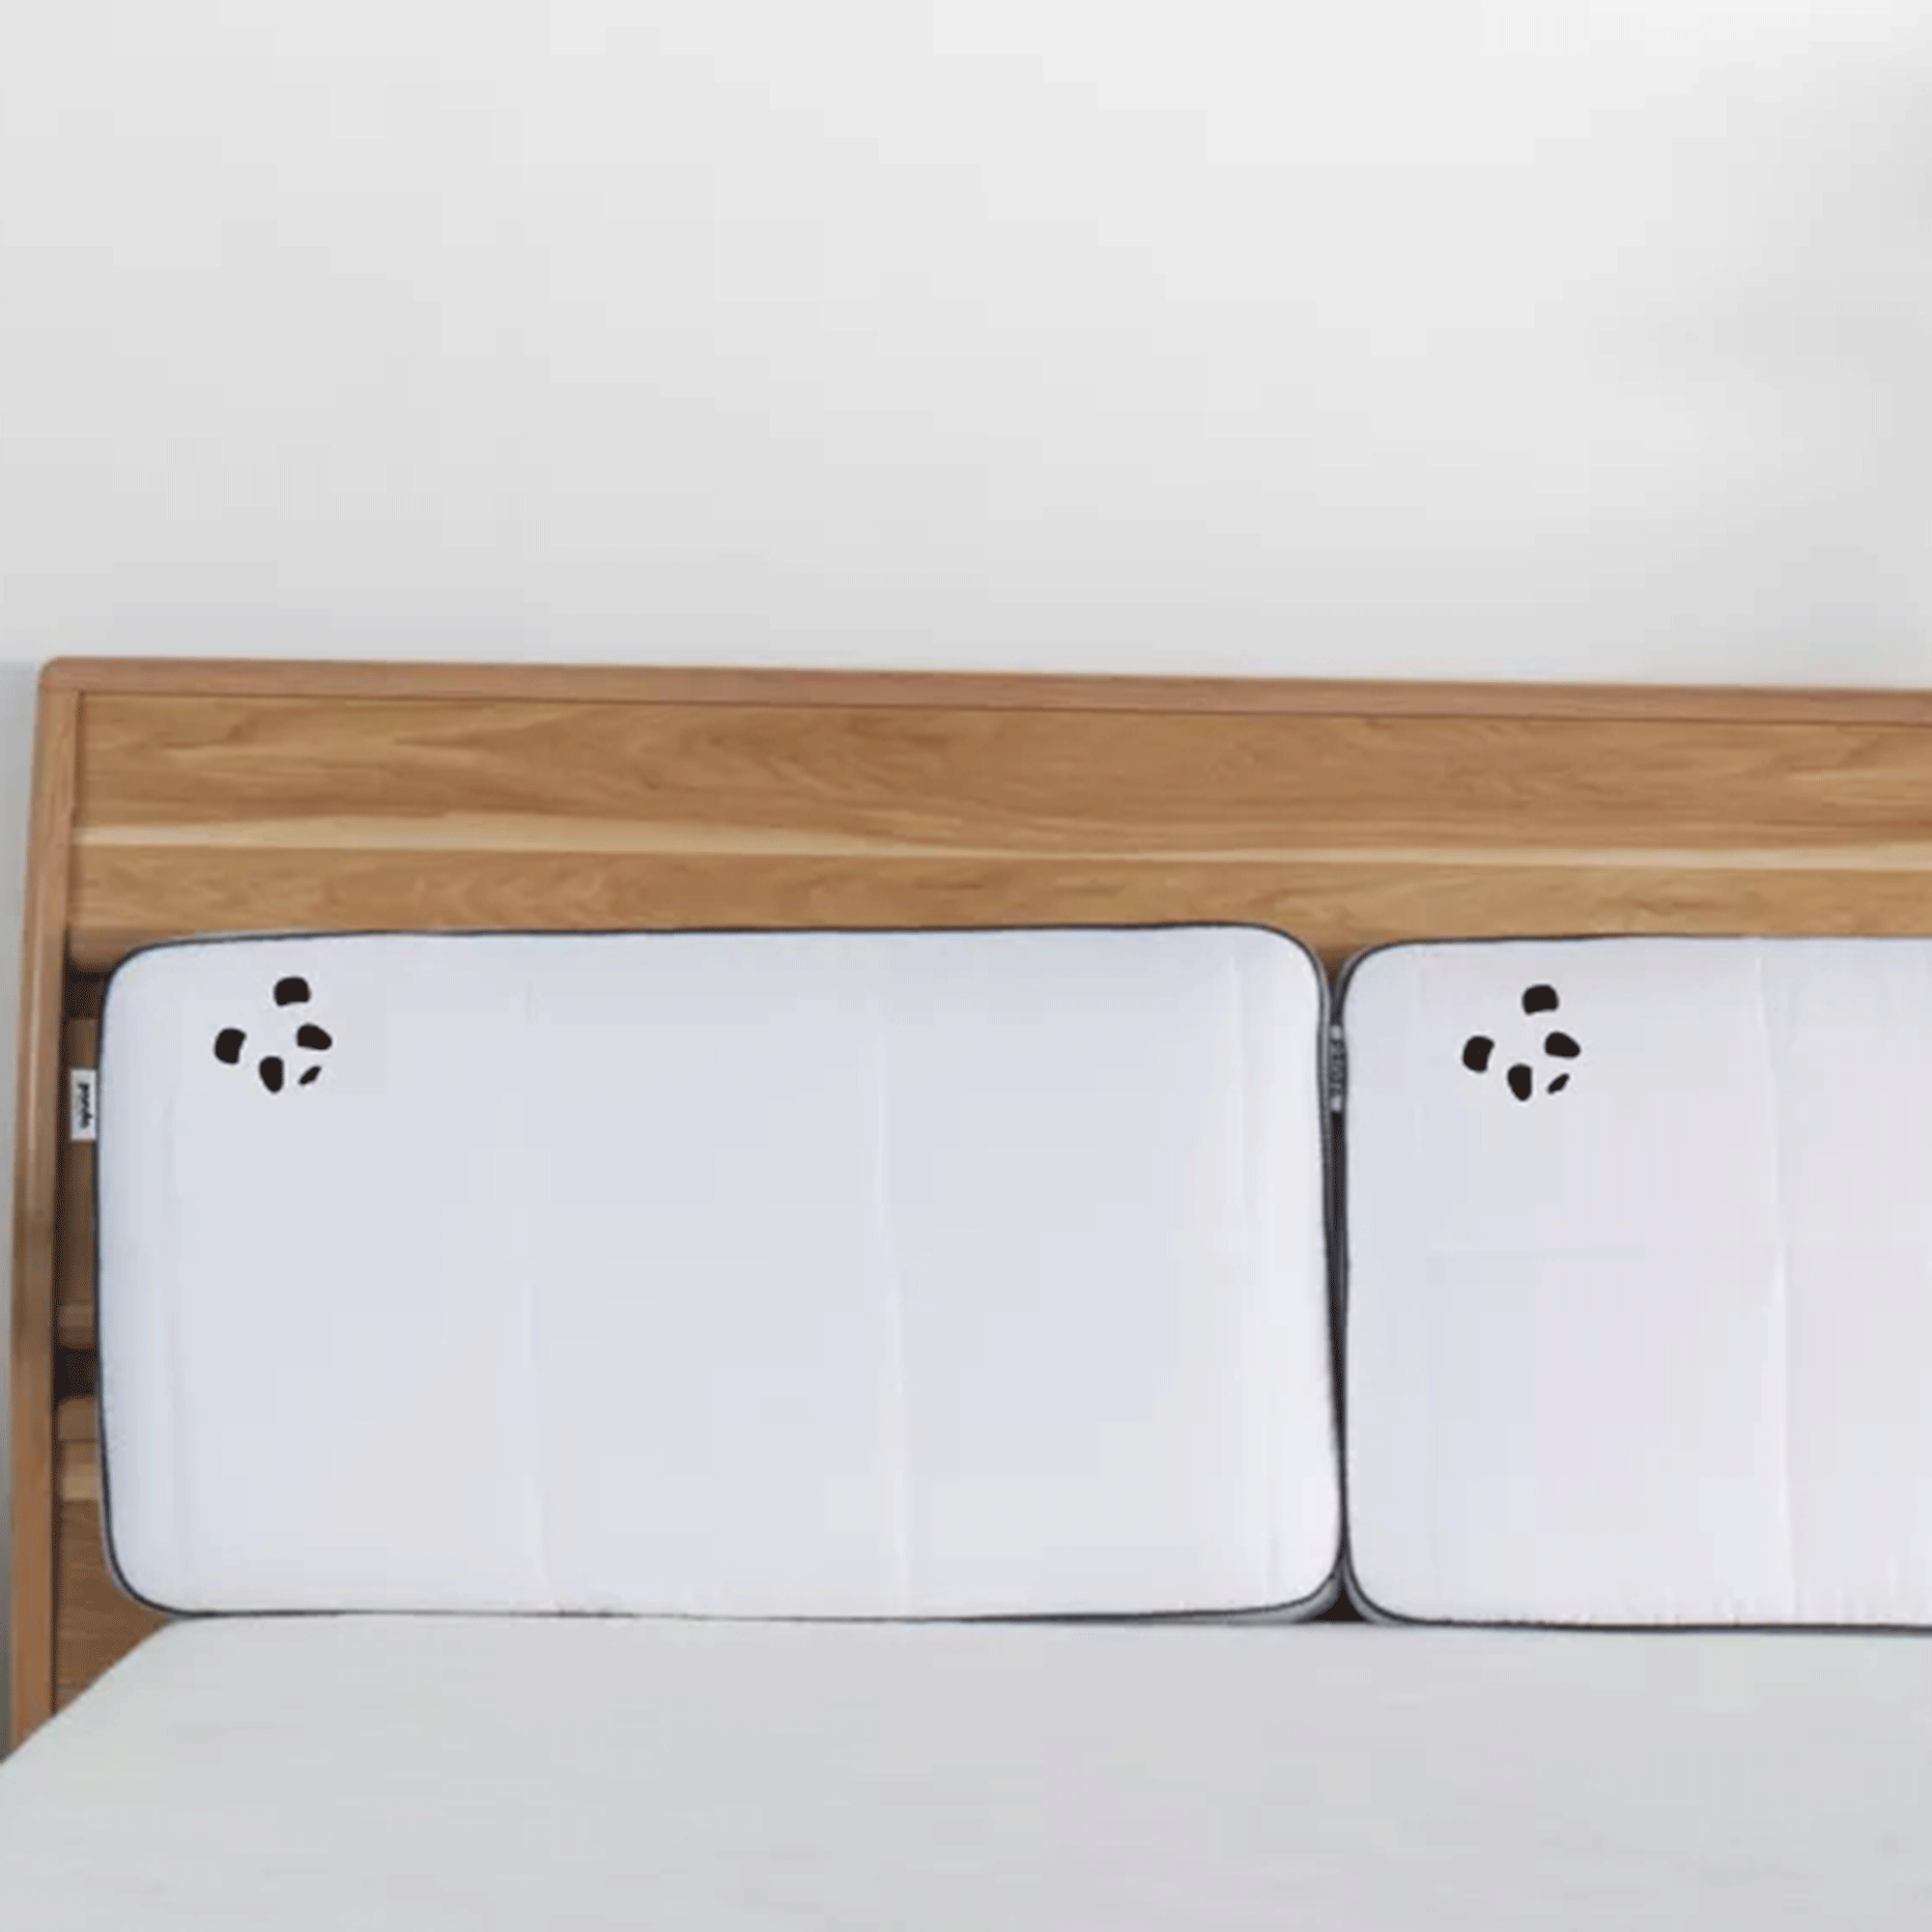 Panda bedding with pillows